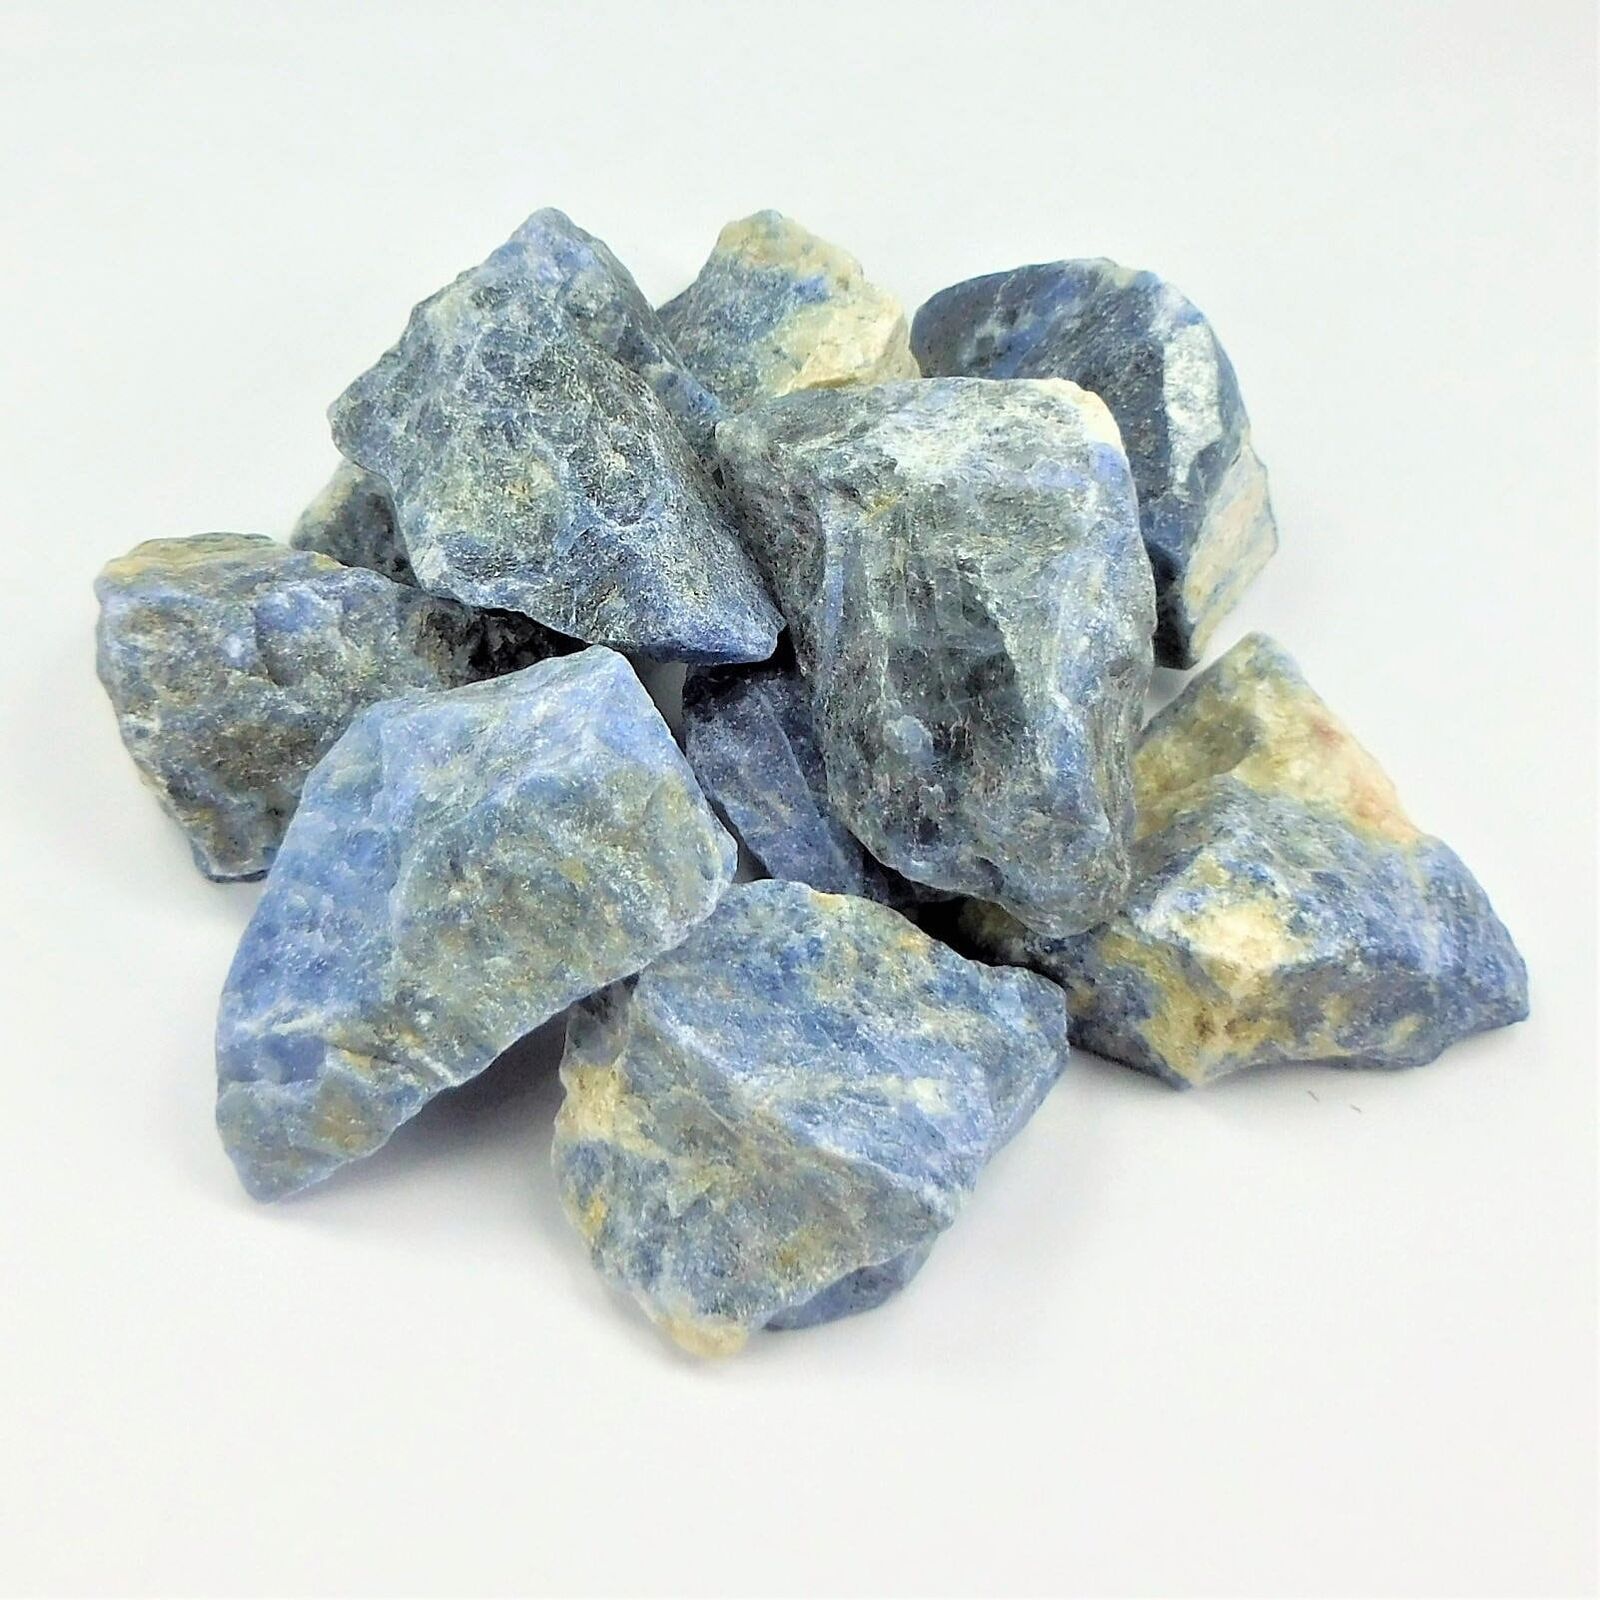 Bulk Wholesale Lot 1 Kilo (2.2 LBs) Rough Blue Sodalite Raw Stones Natural